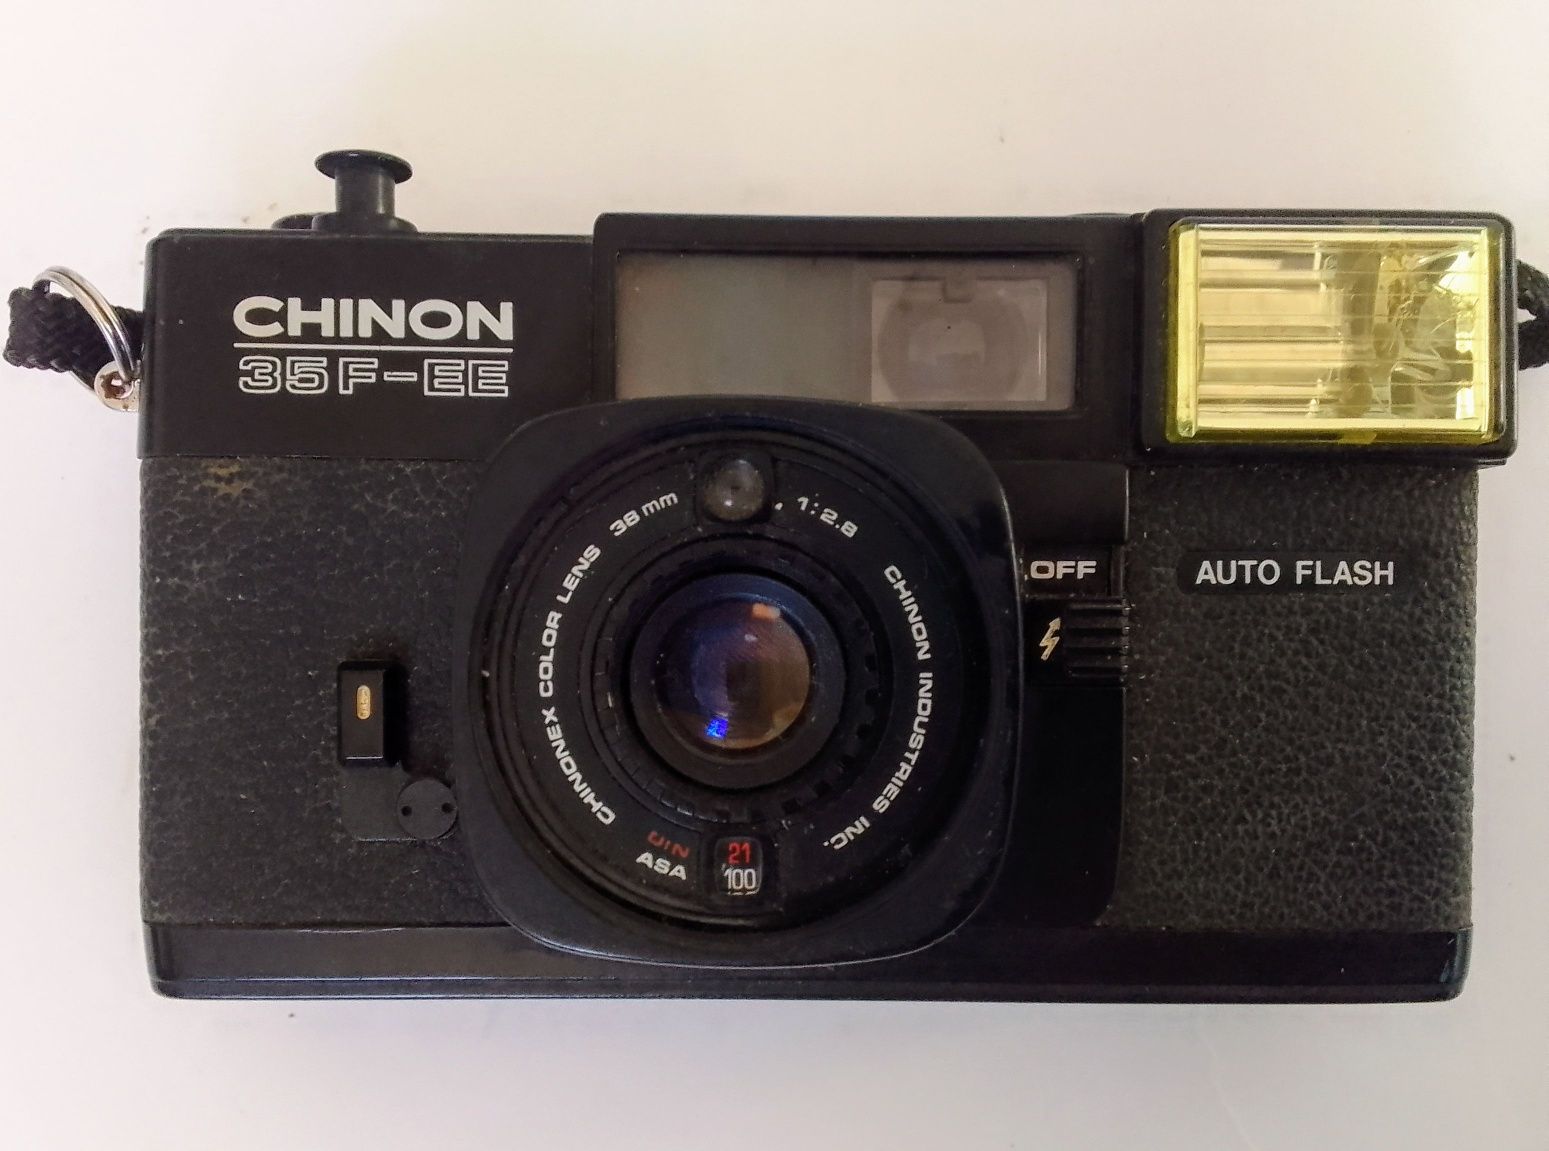 Chinon 35F-EE (maq. fotográfica)